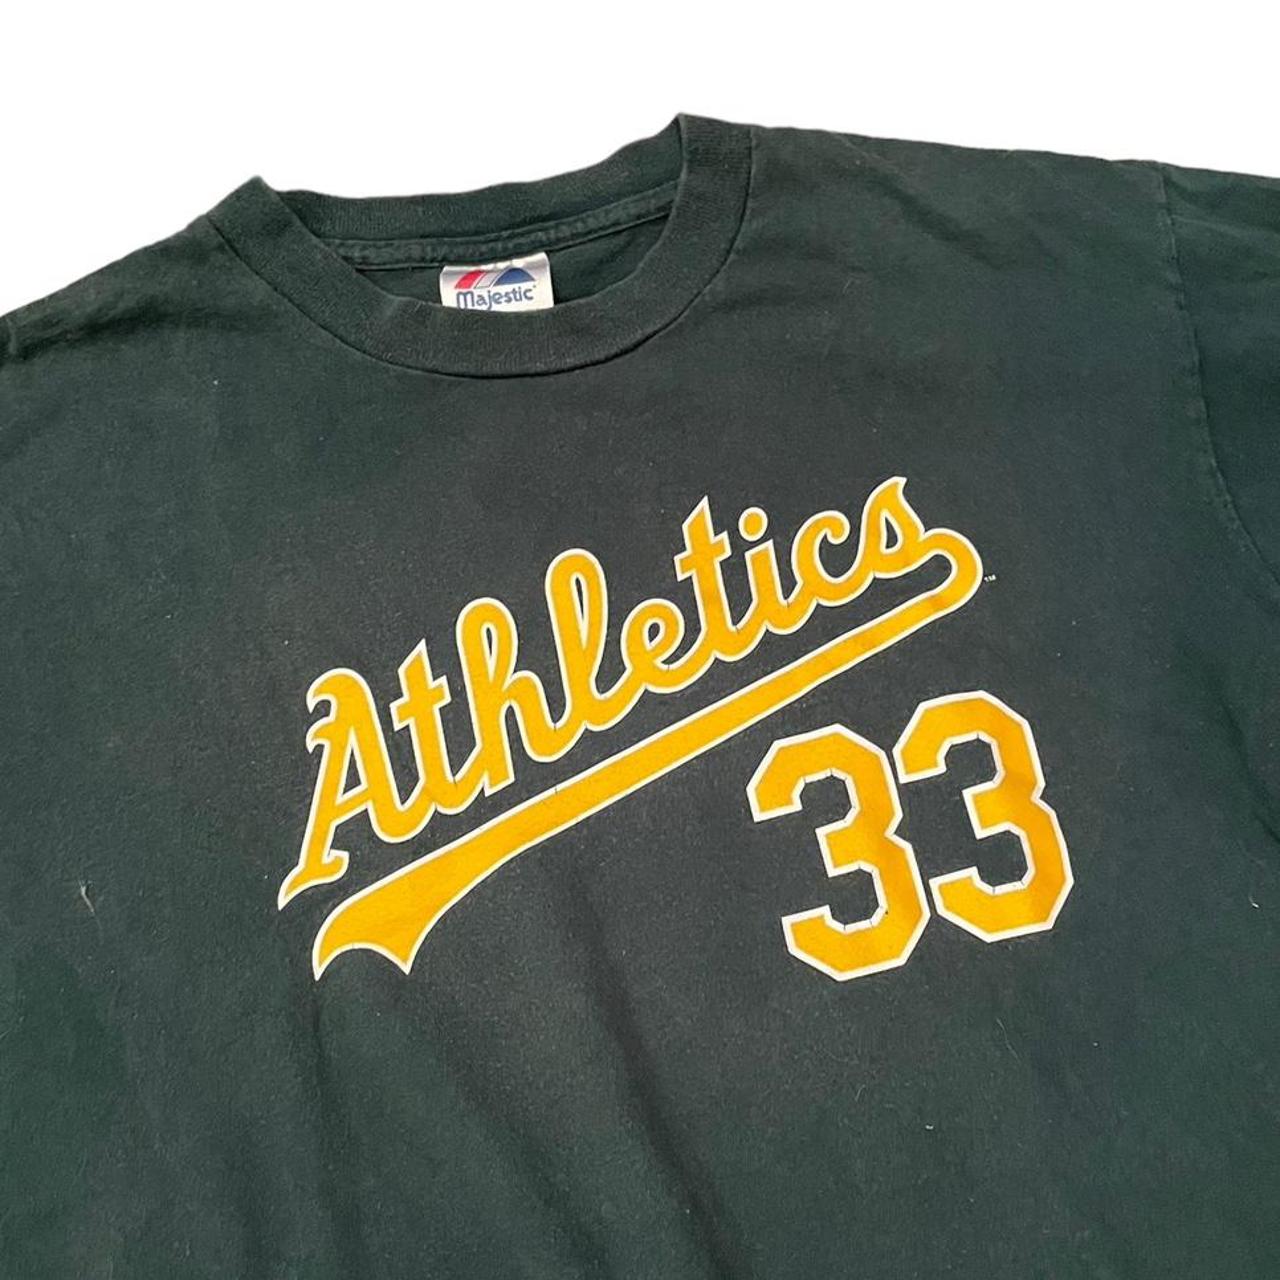 Vintage Oakland Athletics Nick Swisher Shirt Size Small